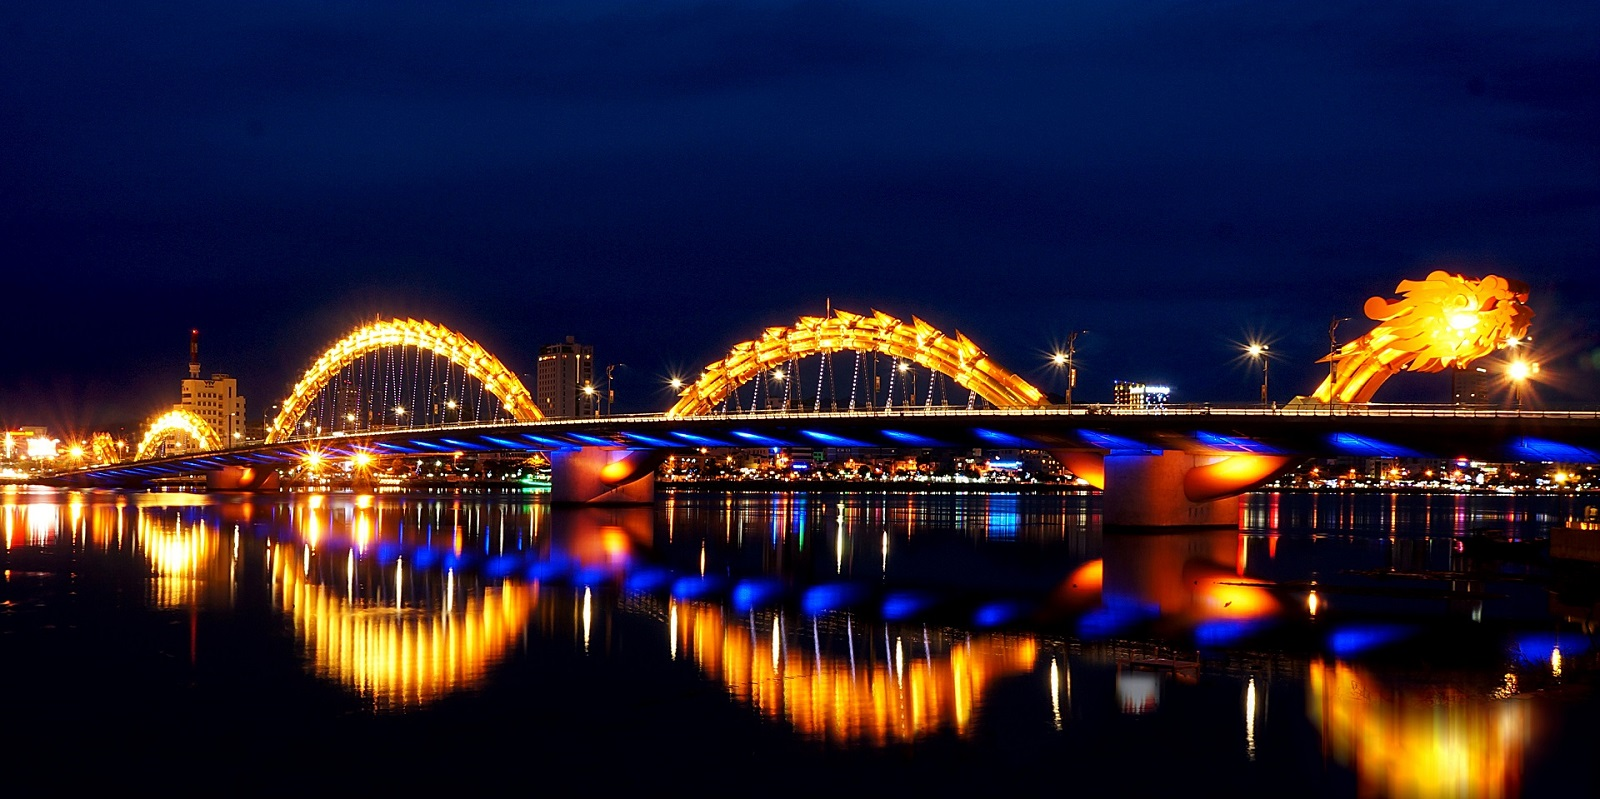 Check-in to the tourism city of Da Nang - The city of bridges - Dragon bridge 